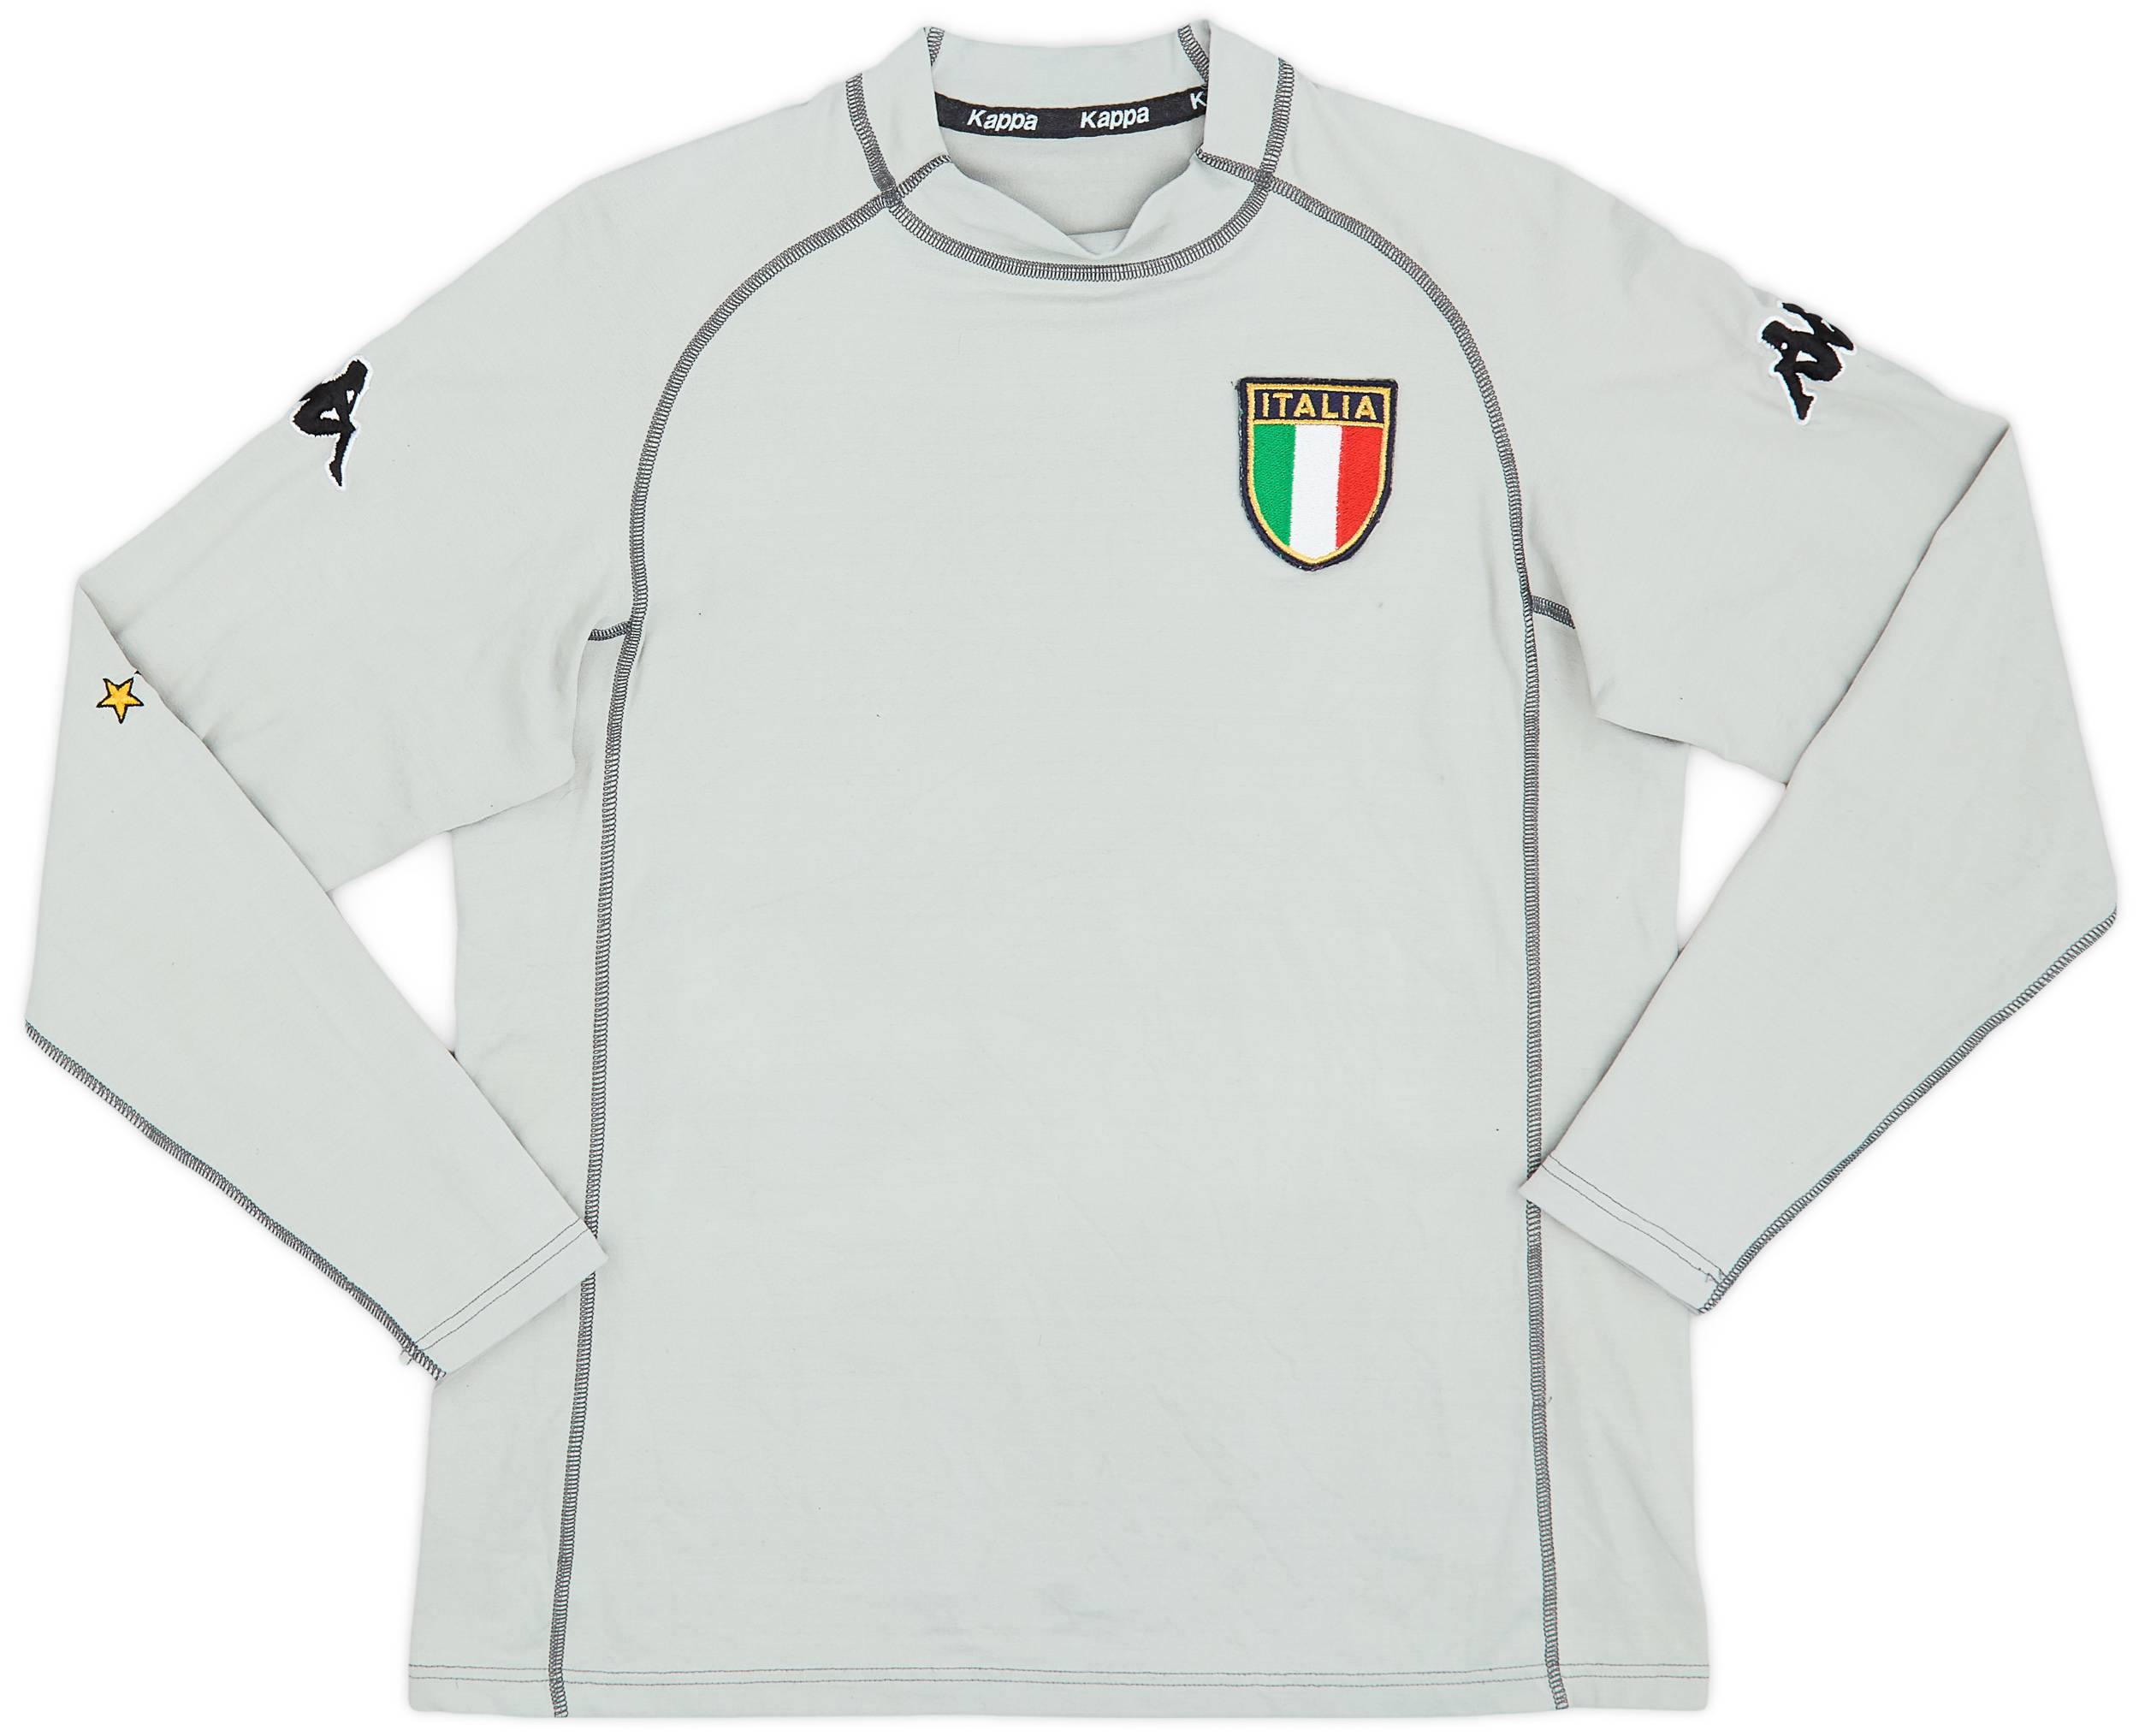 2000 Italy GK Shirt - 9/10 - (S)